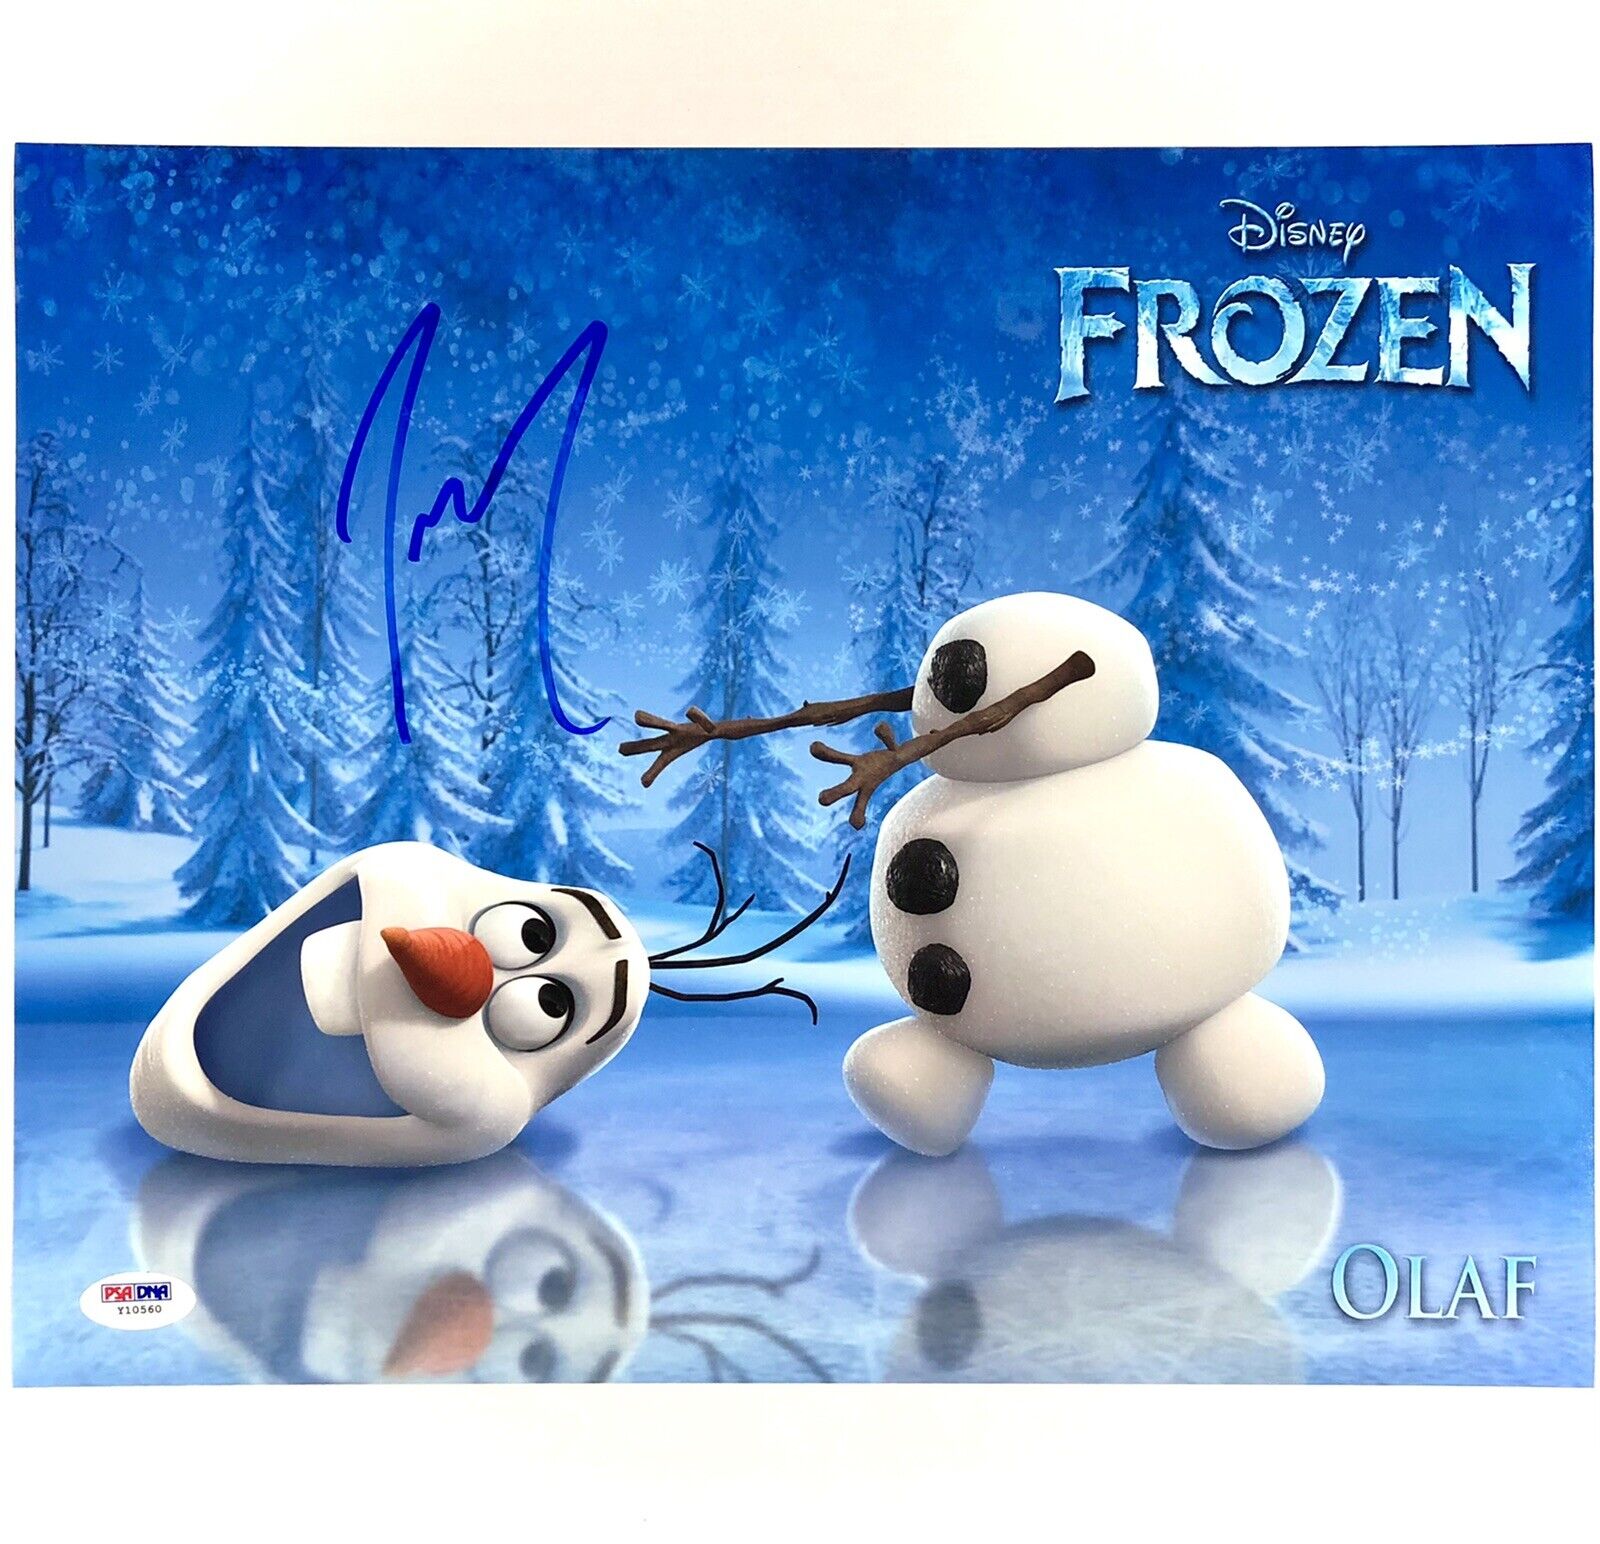 Josh Gad voice of Olaf autograph signed Disney’s Frozen 11x14 Photo Poster painting PSA/DNA COA